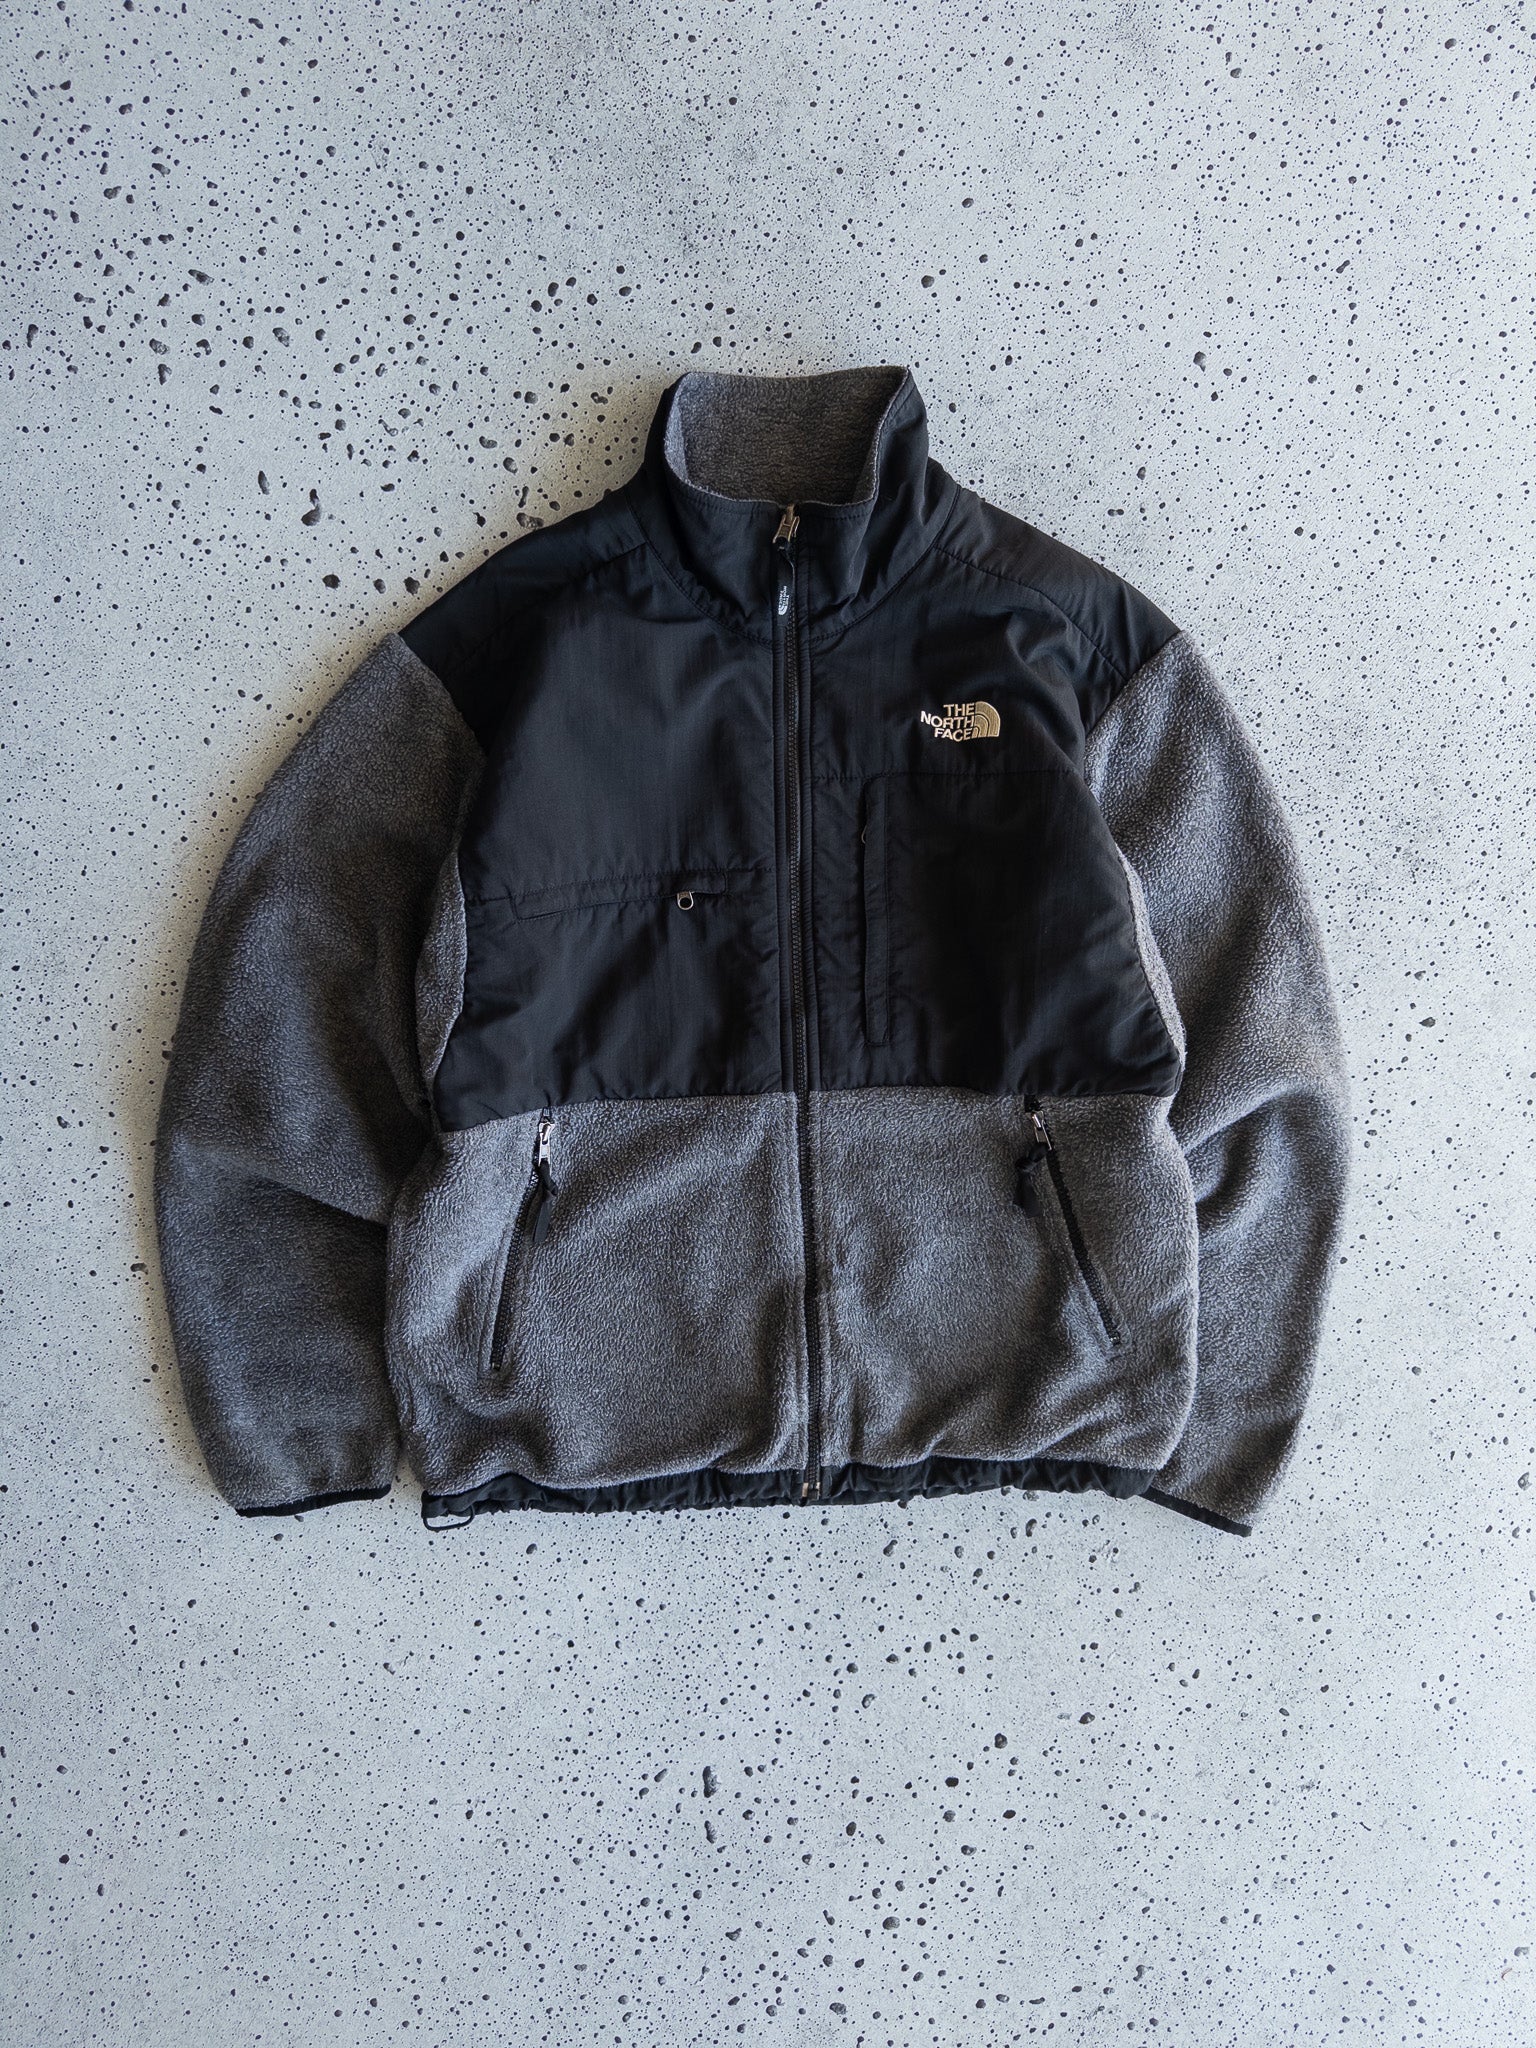 Vintage The North Face Denali Jacket (M)